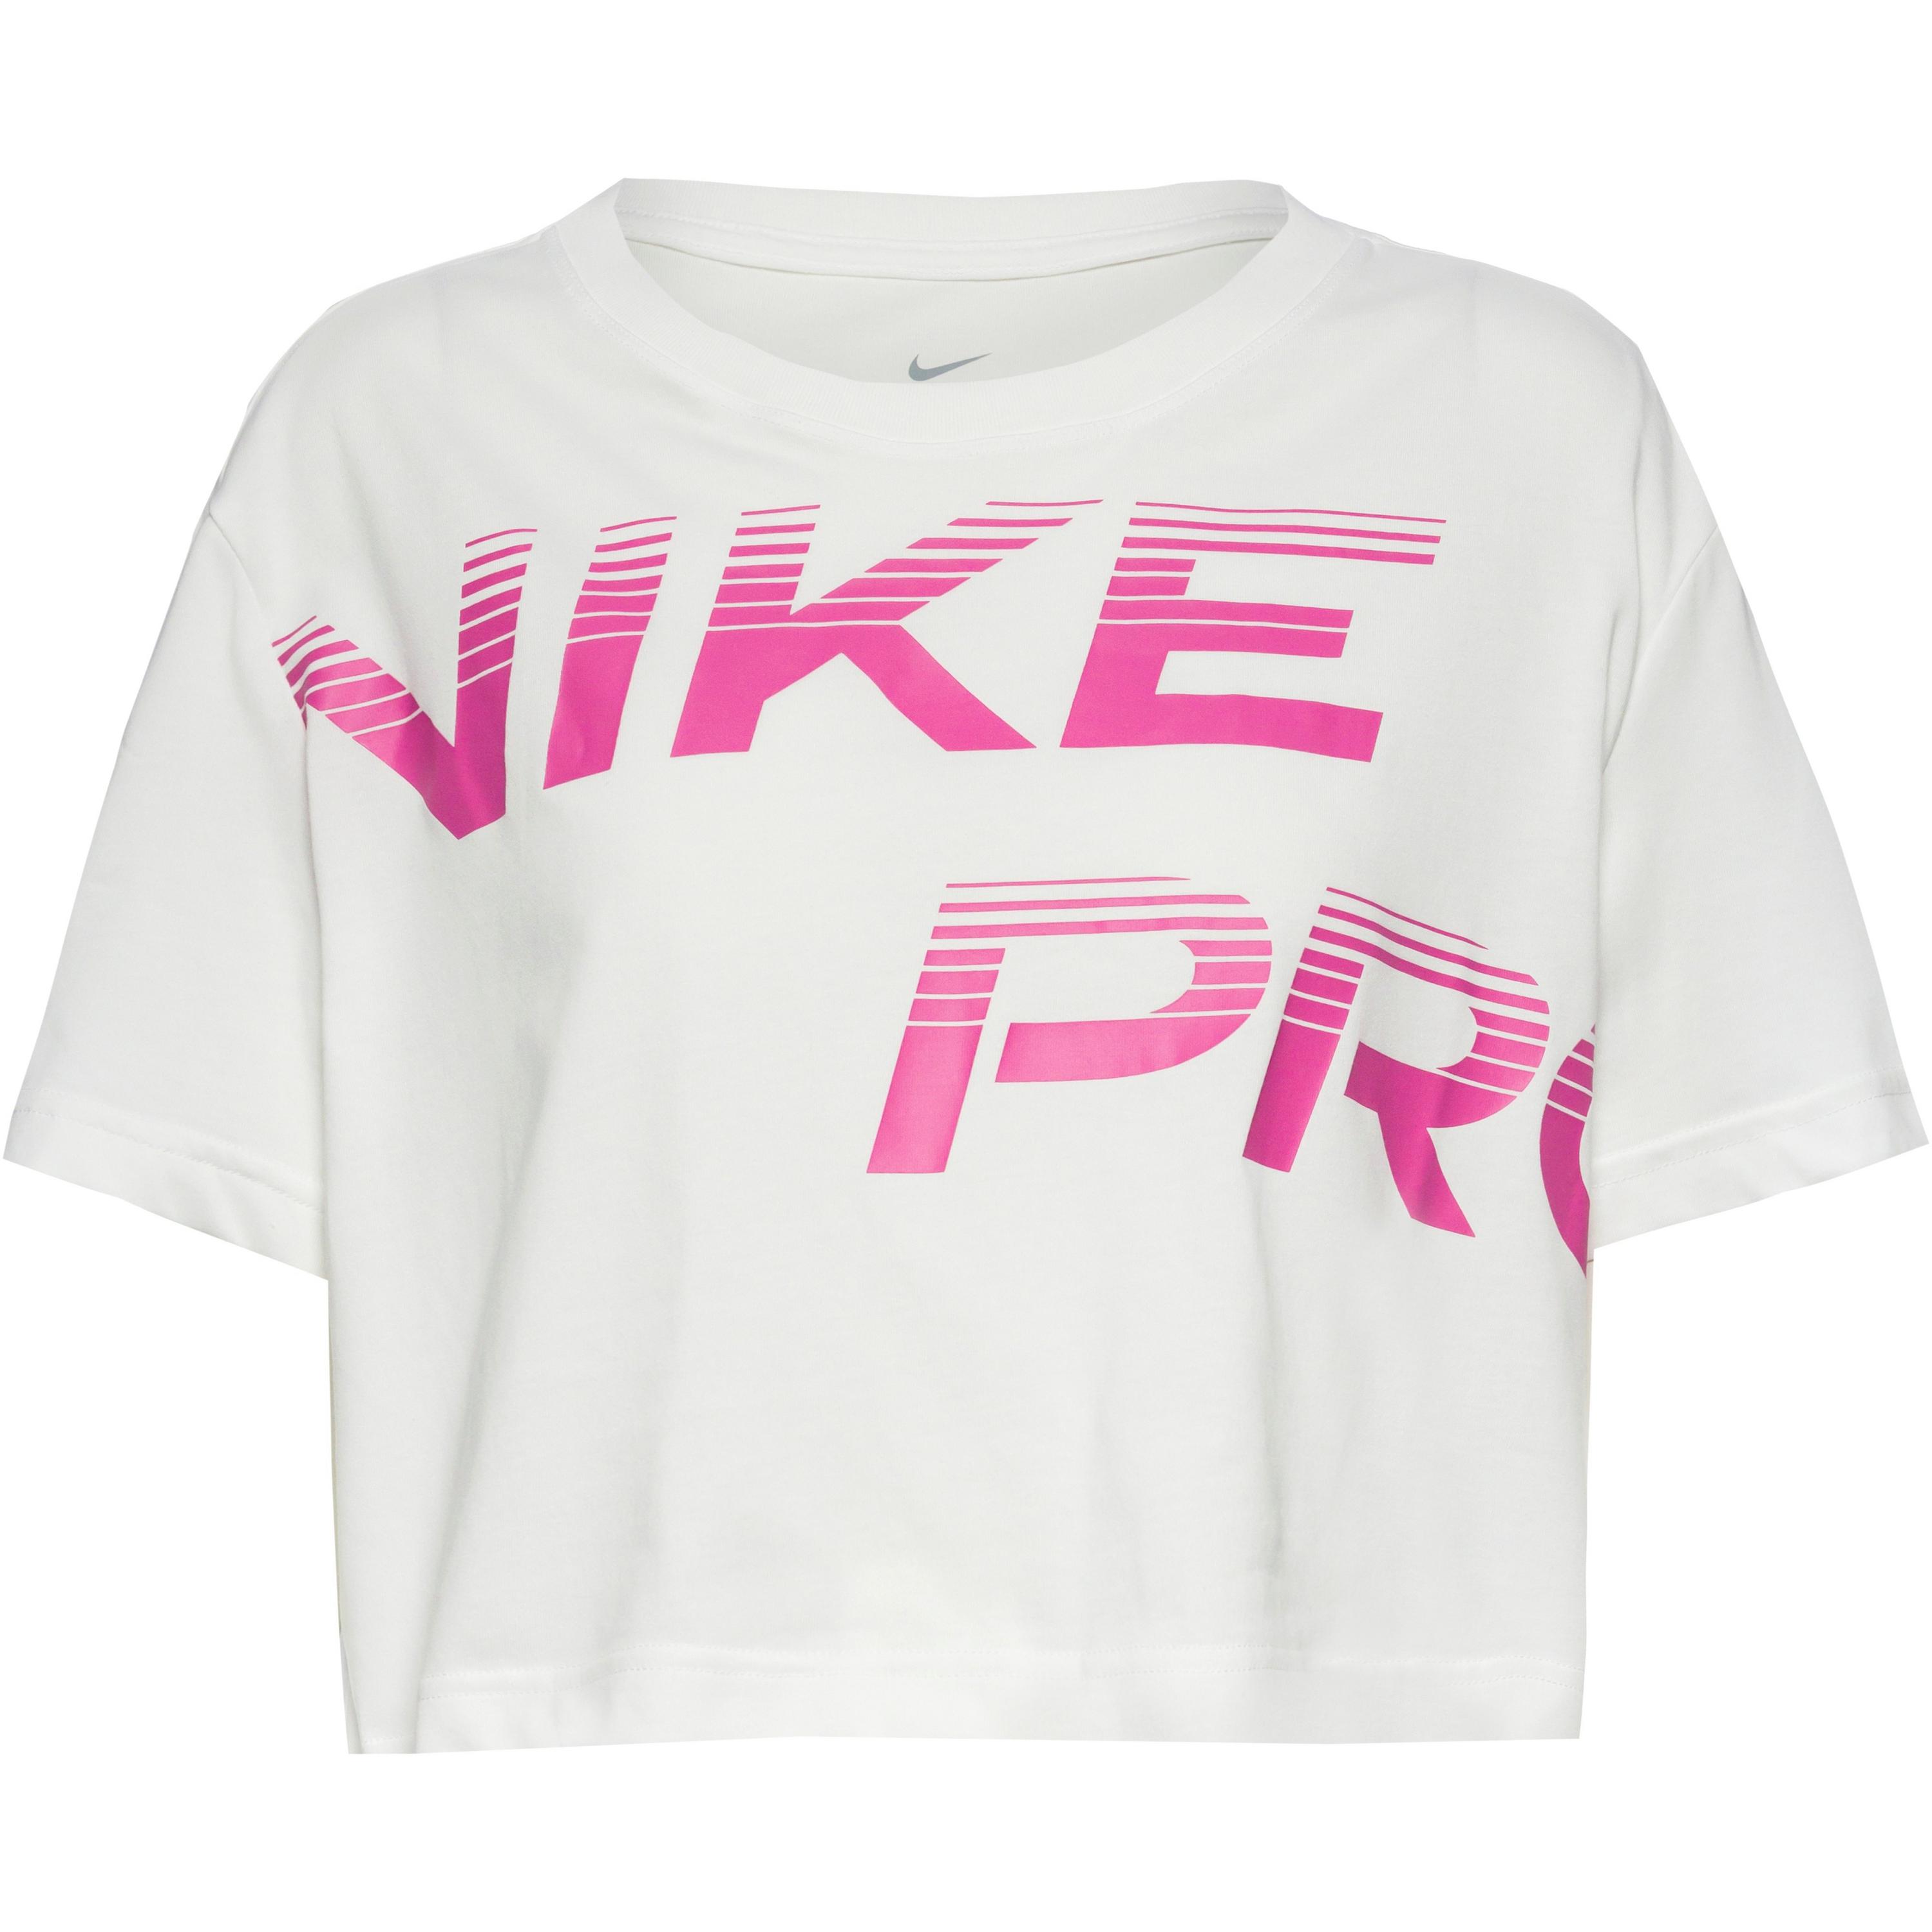 Nike Pro Funktionsshirt Damen